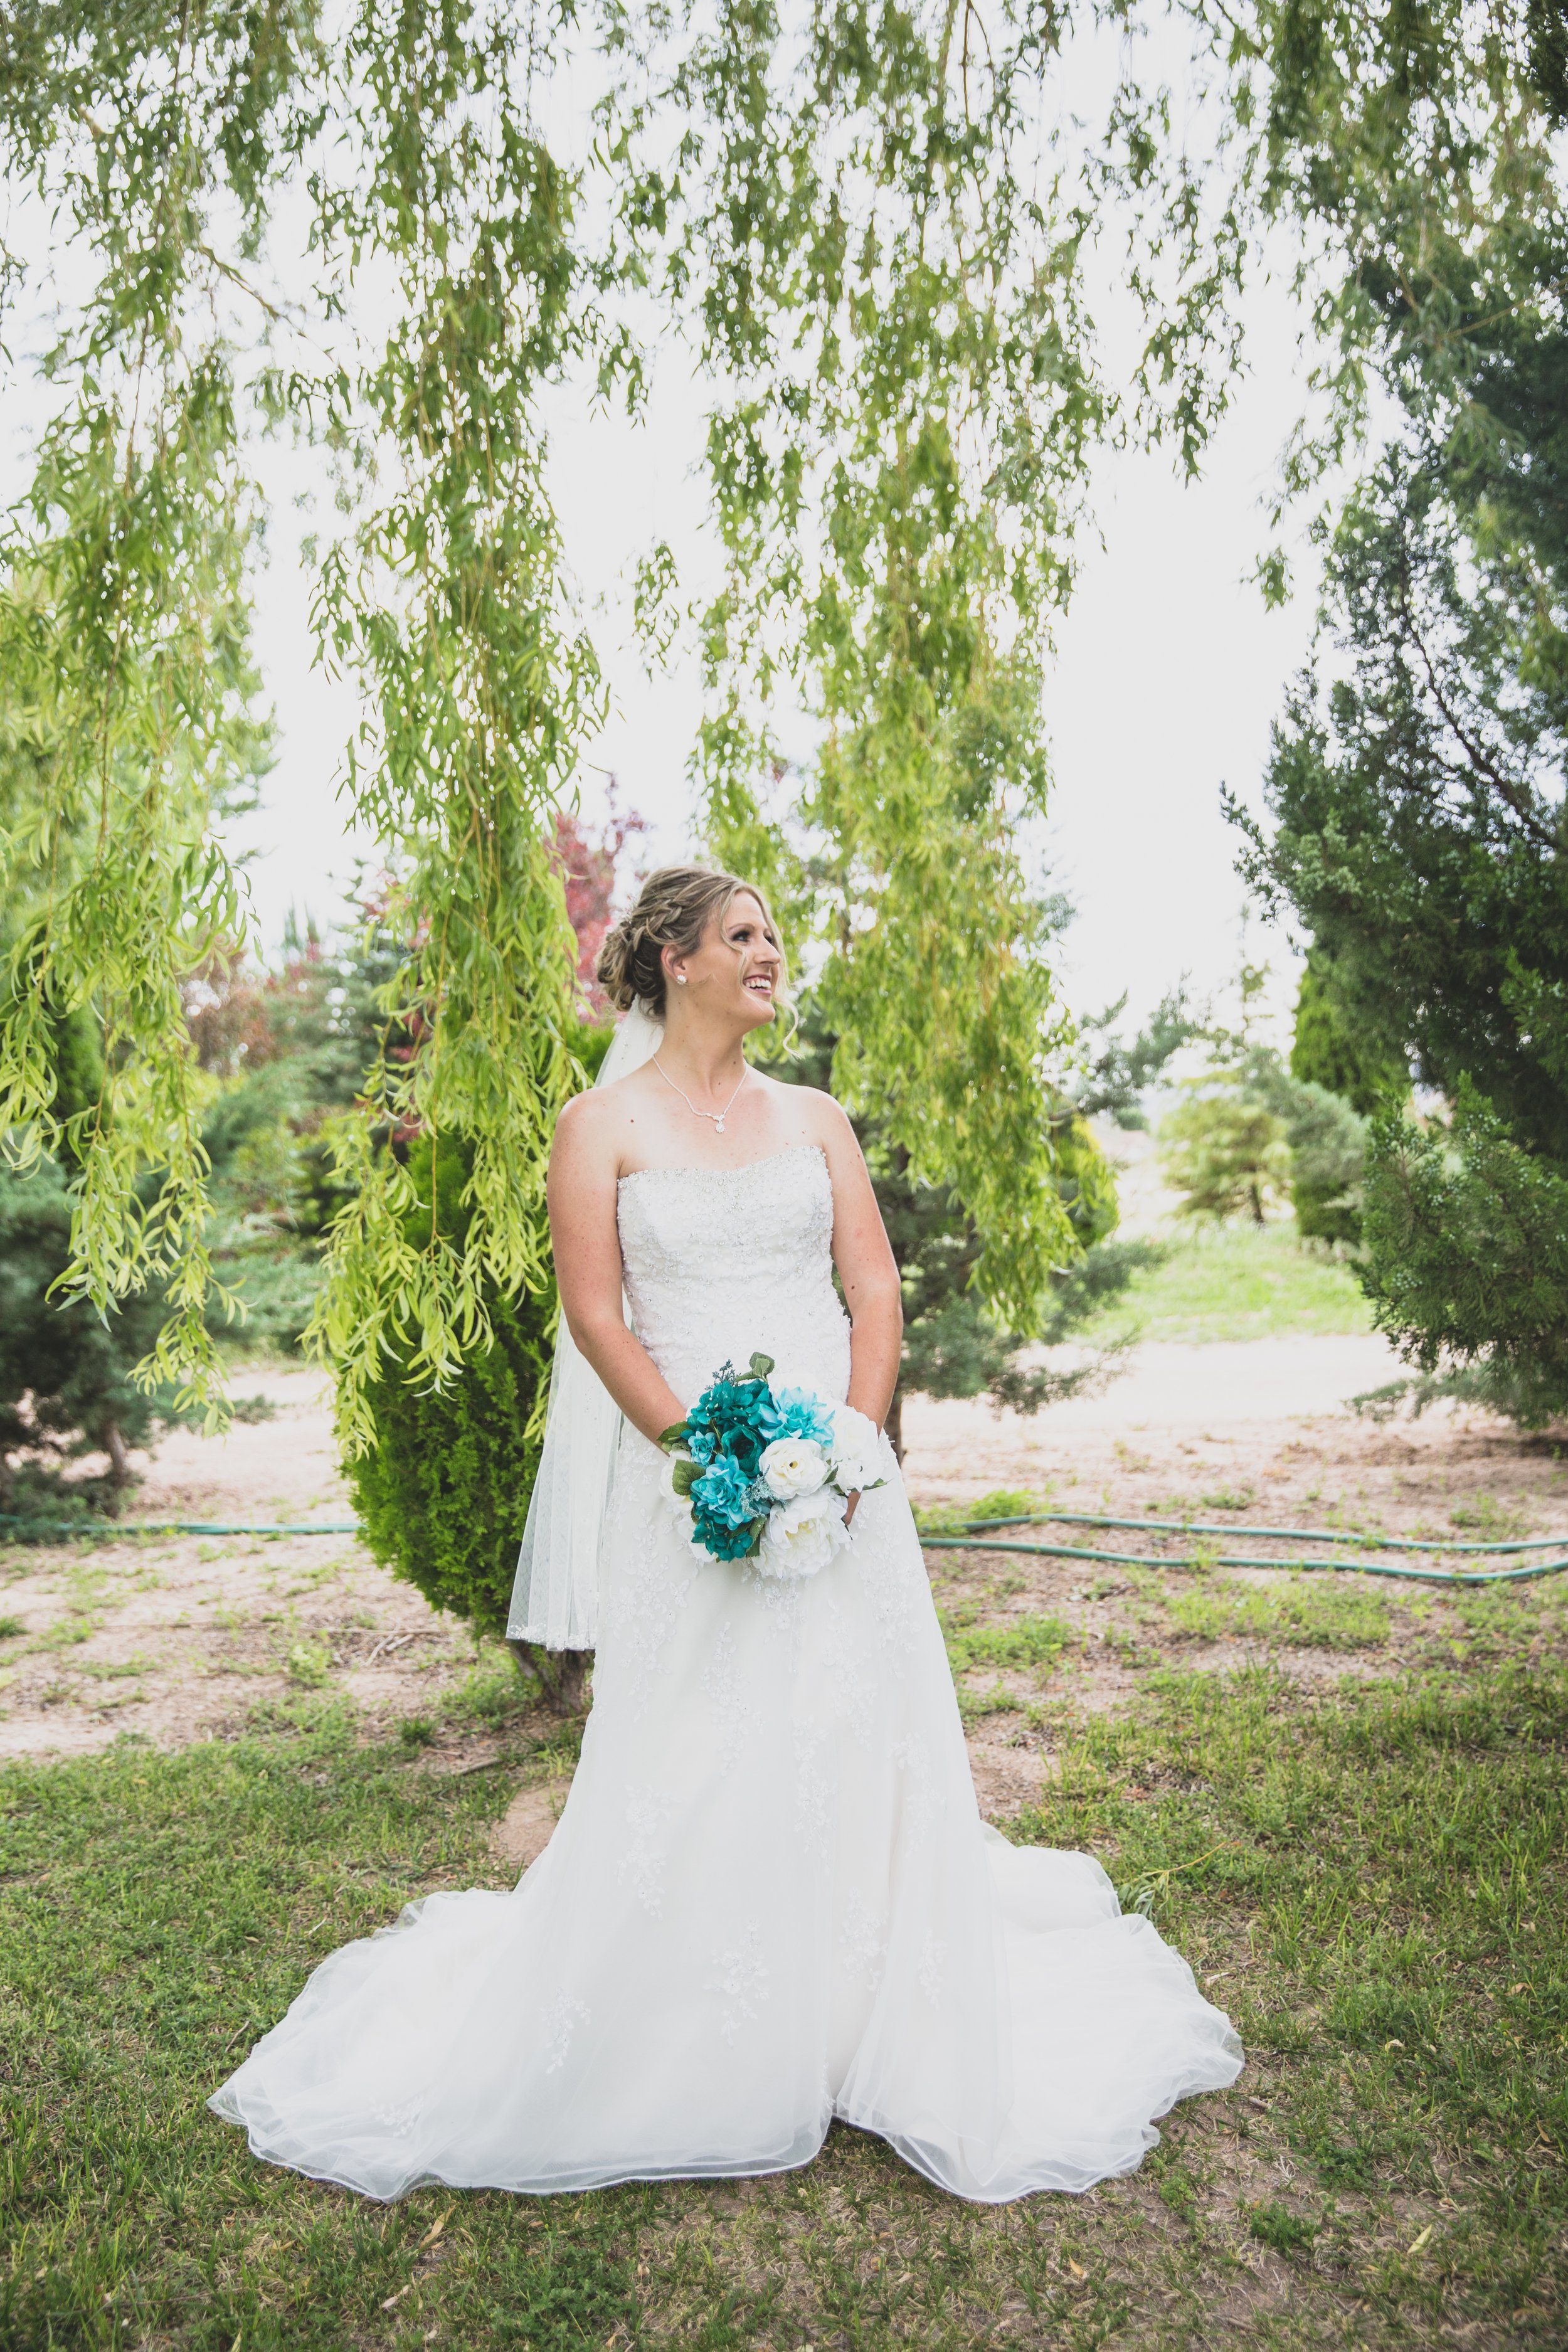  Portrait of Bride and bouquet  at Arizona wedding by Northern Arizona Wedding Photographer, Jennifer Lind Schutsky.  